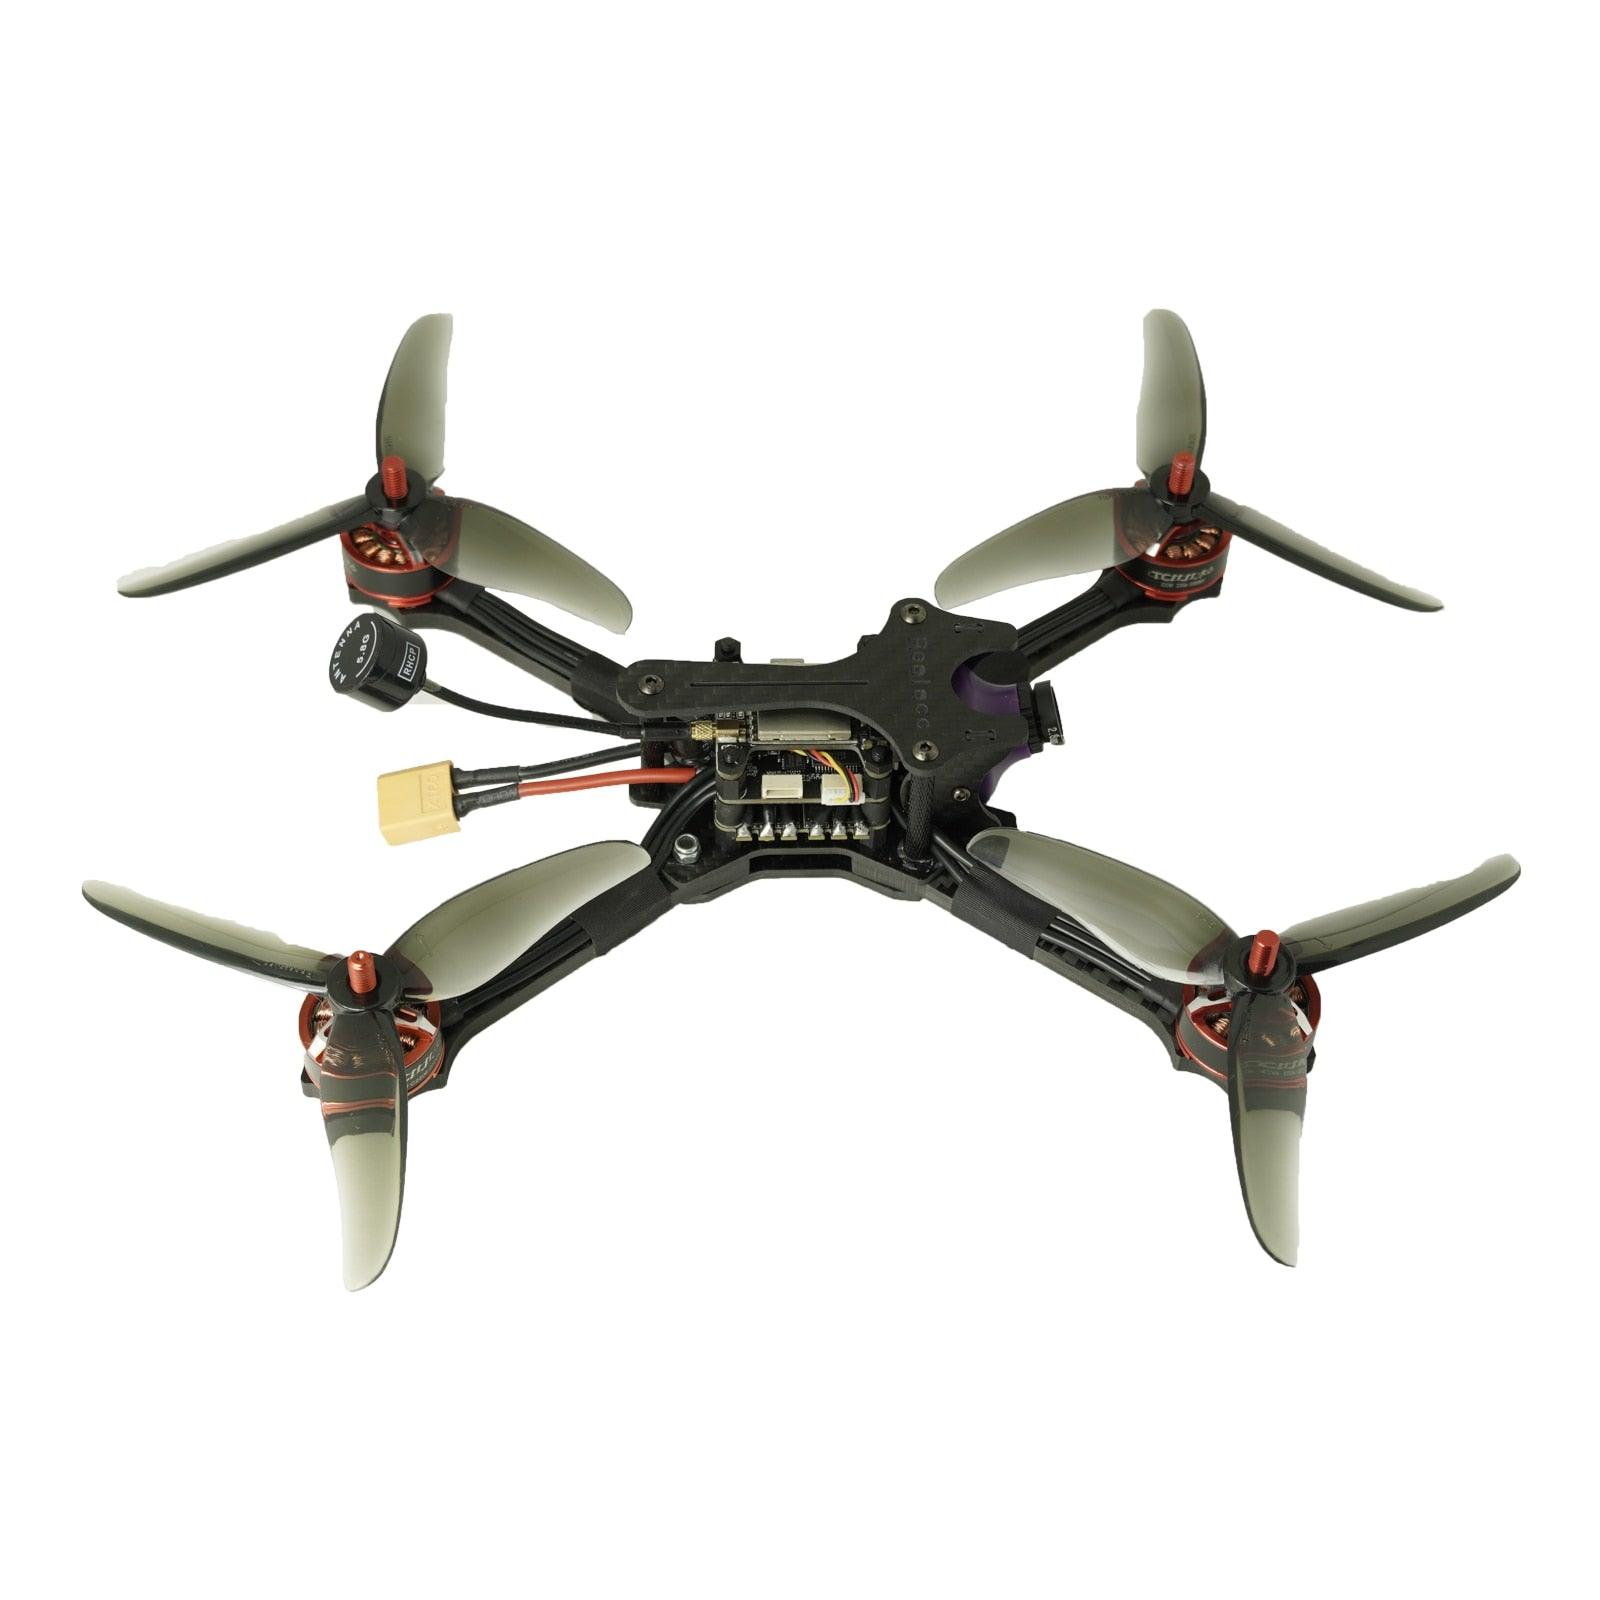 Racing Drone Quadcopter Fpv, Vtx Pro Racing Drone